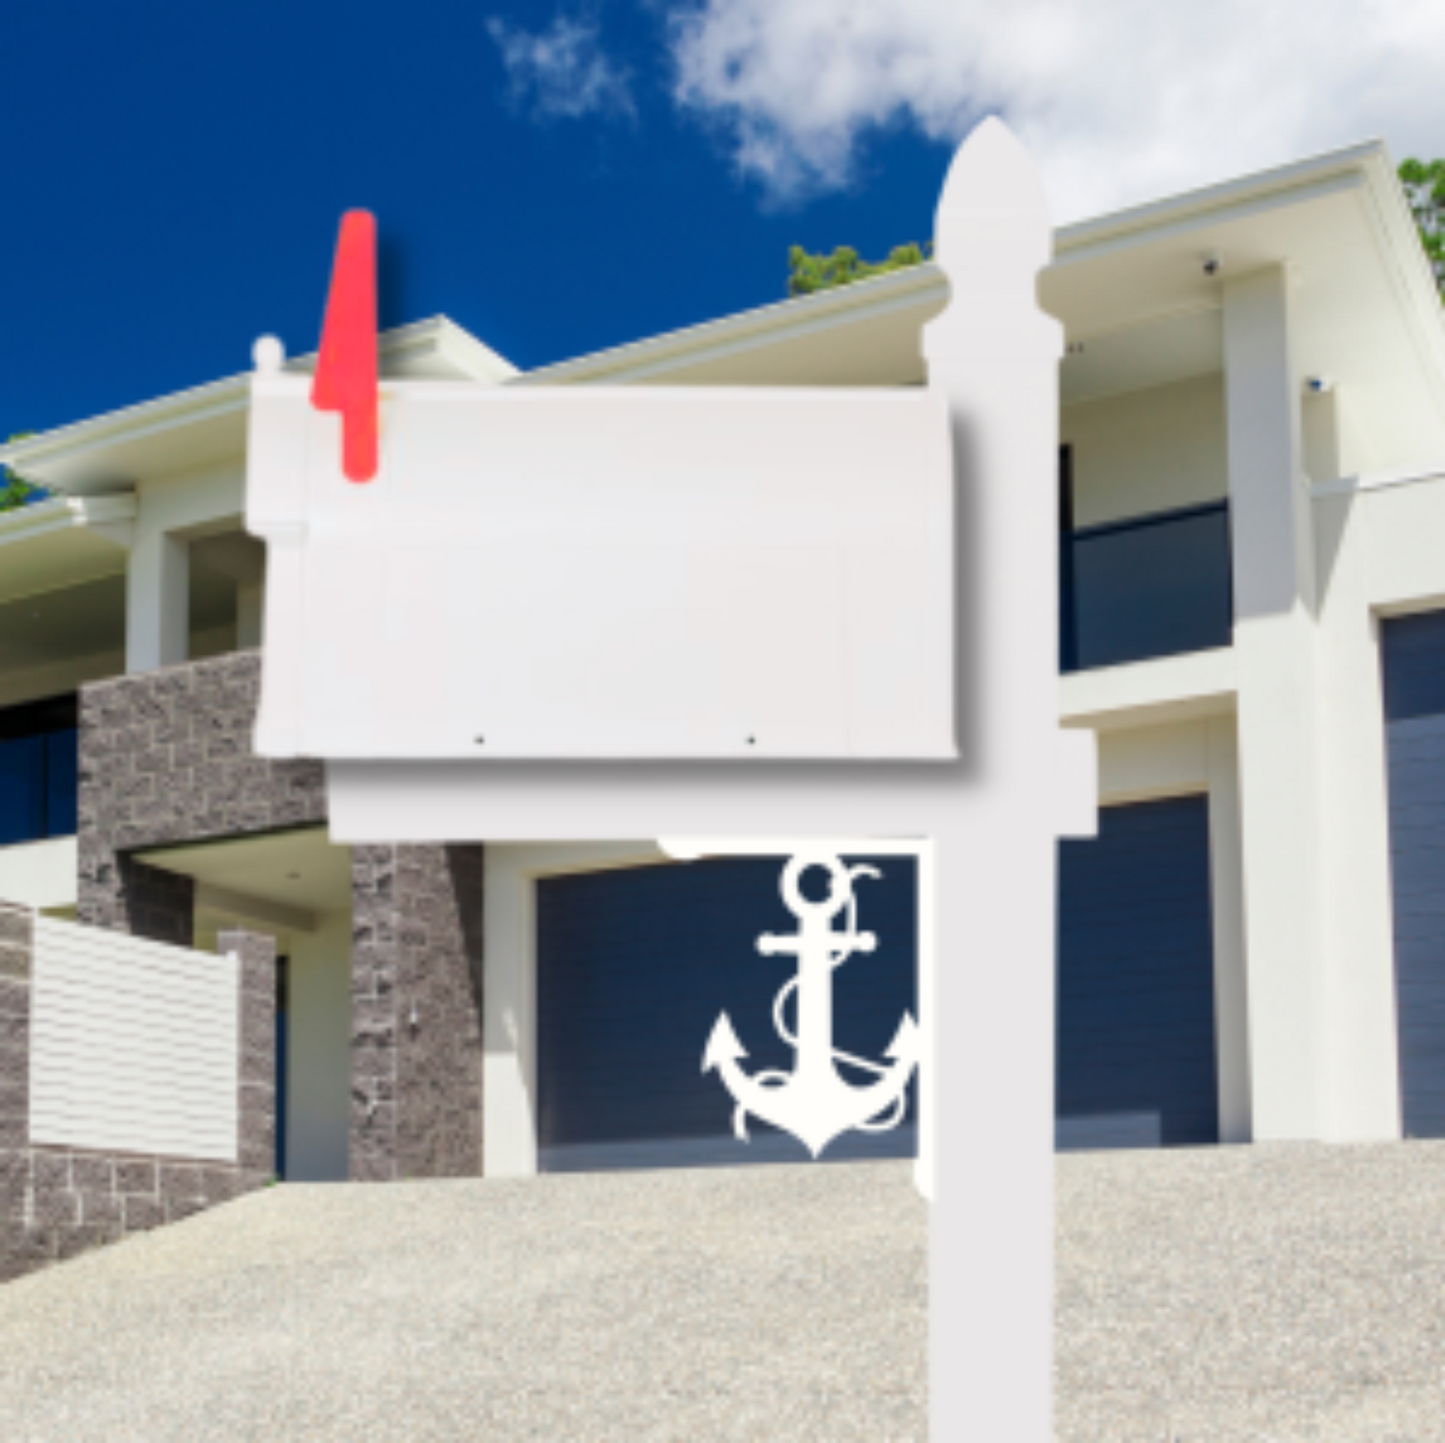 Mailbox Bracket - Anchor Small 7x9 inch, Custom Mailbox, Coastal, Tropical, Bracket, Outdoor Decor, Mailbox & Post Not Included